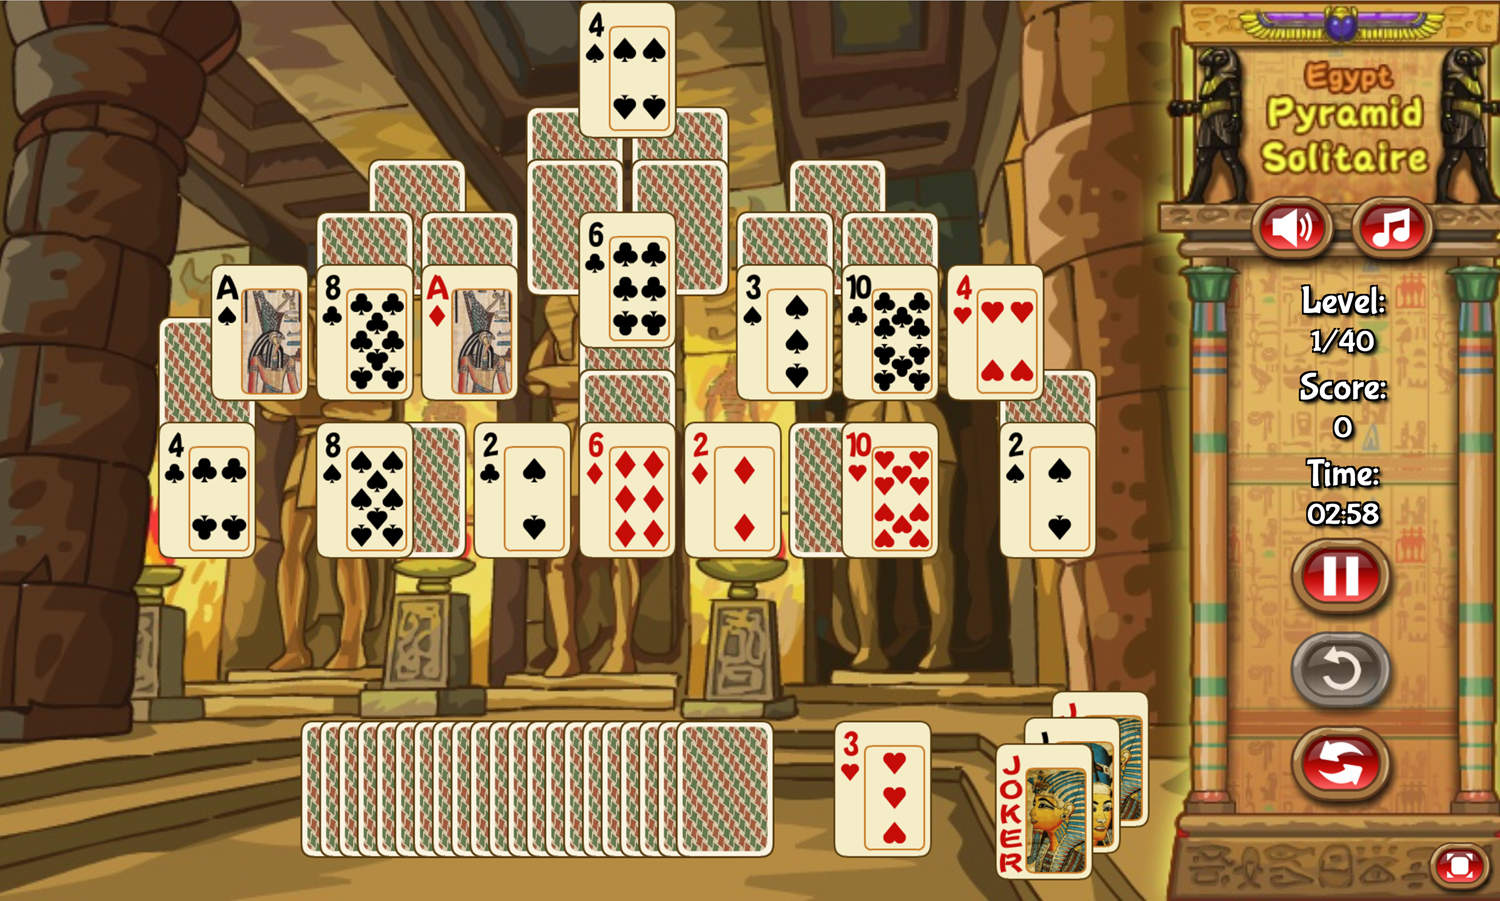 Egypt Pyramid Solitaire Game Screenshot.